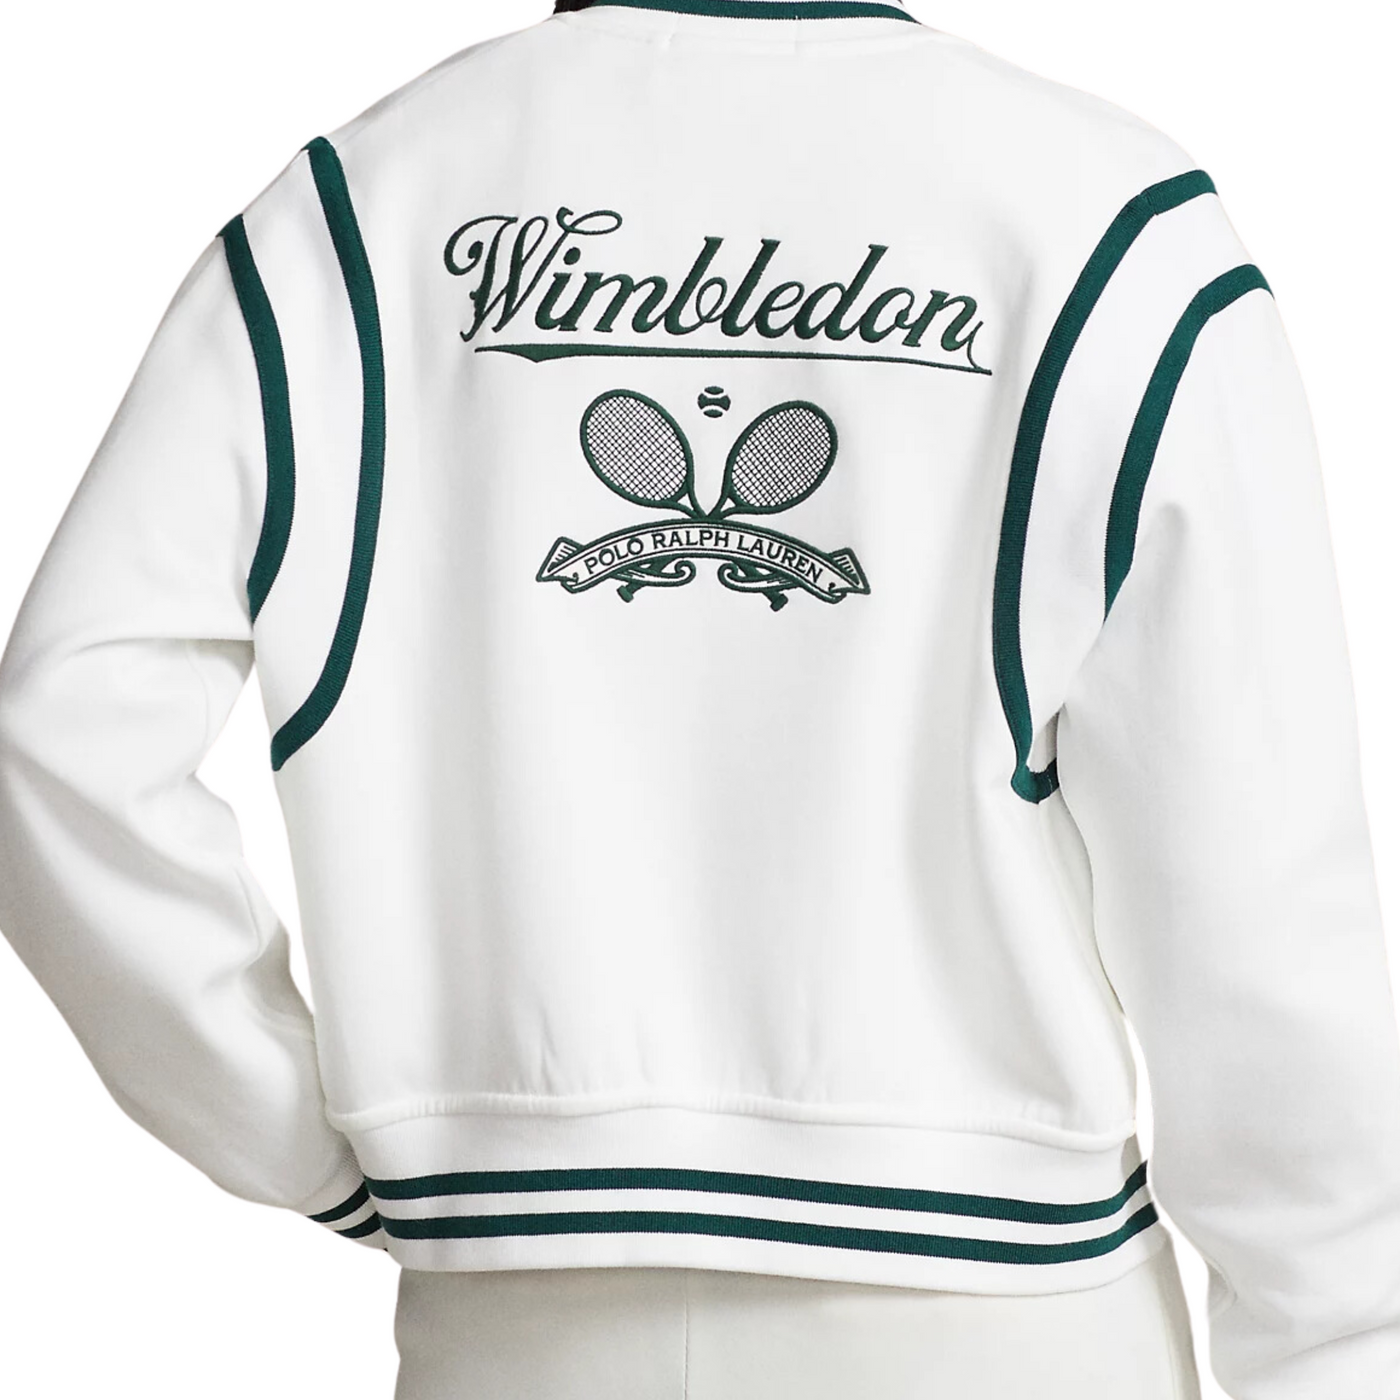 Wimbledon Double Knit Bomber Jacket in White